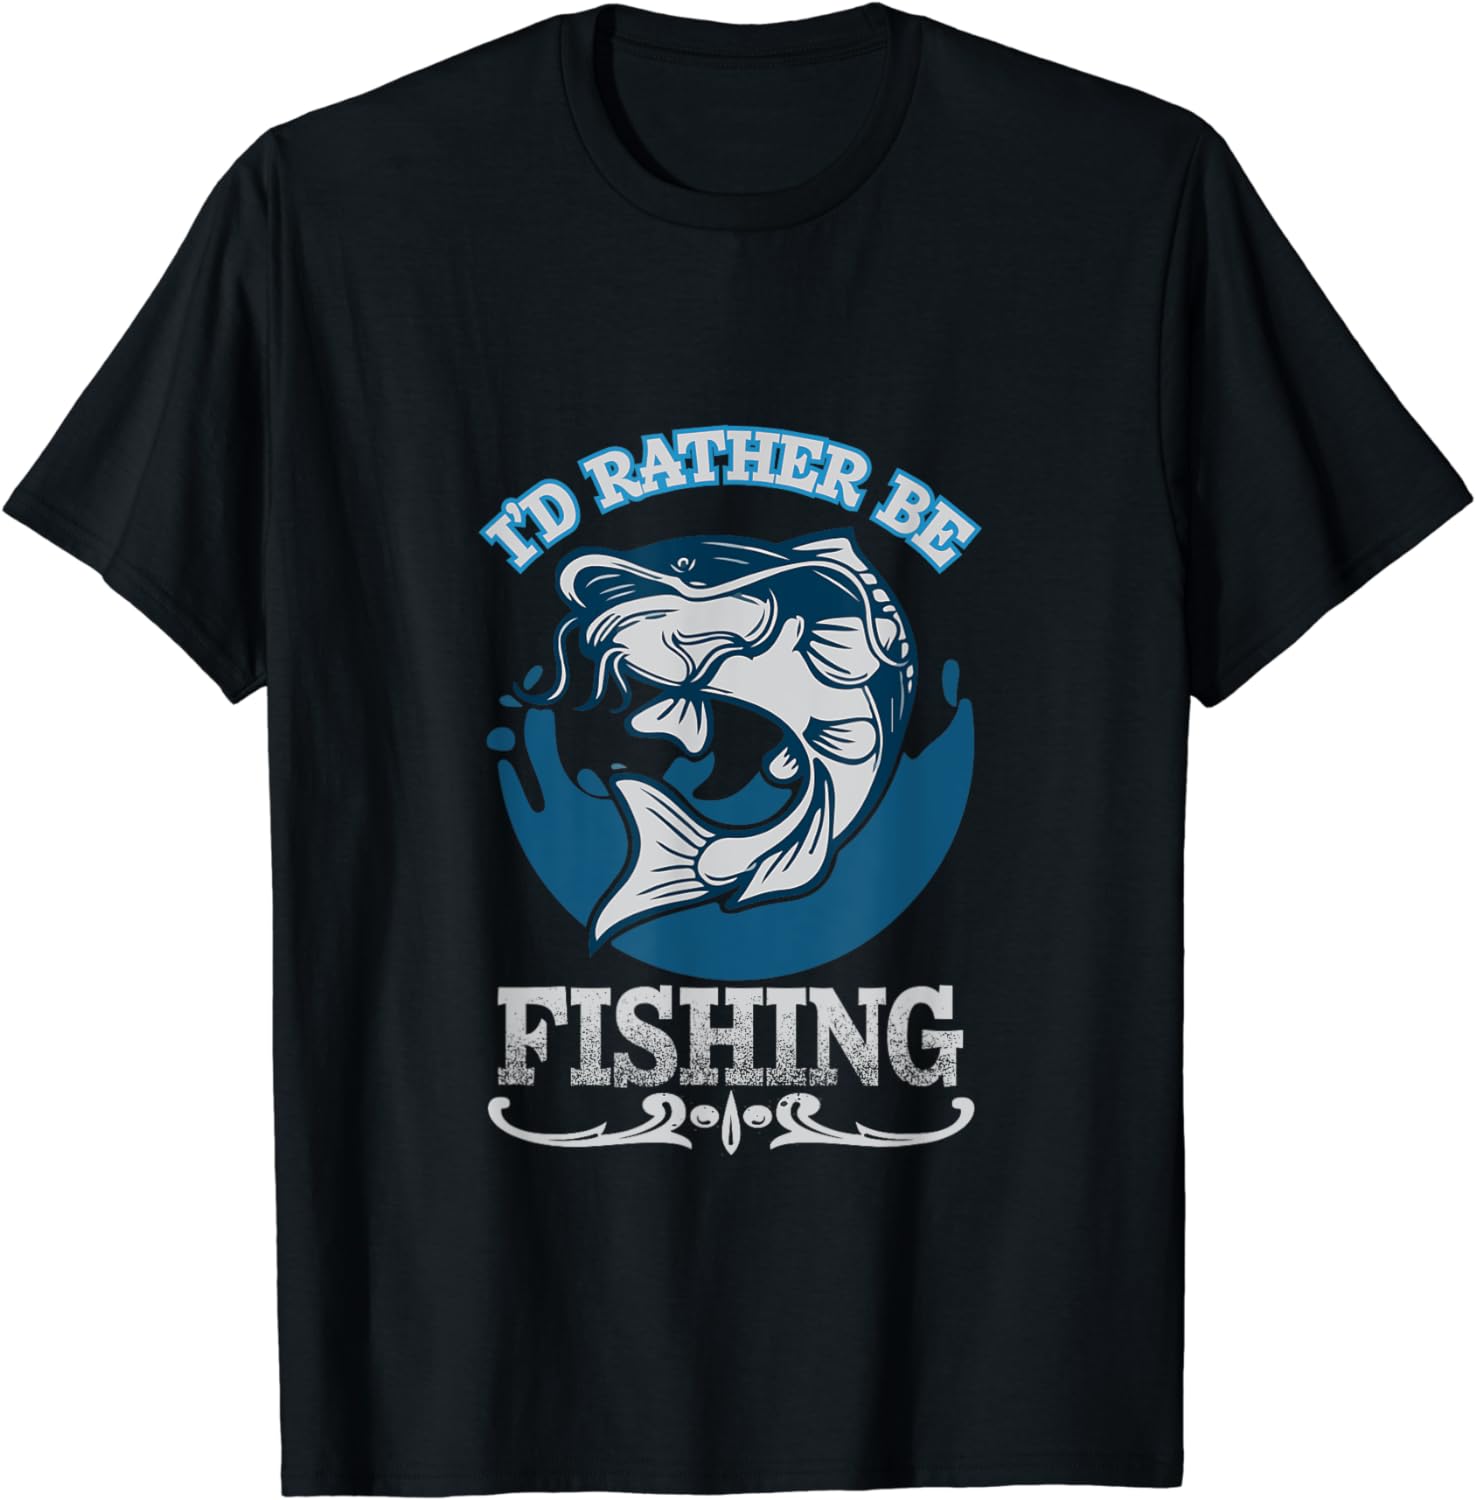 Rather be Fishing T-Shirt